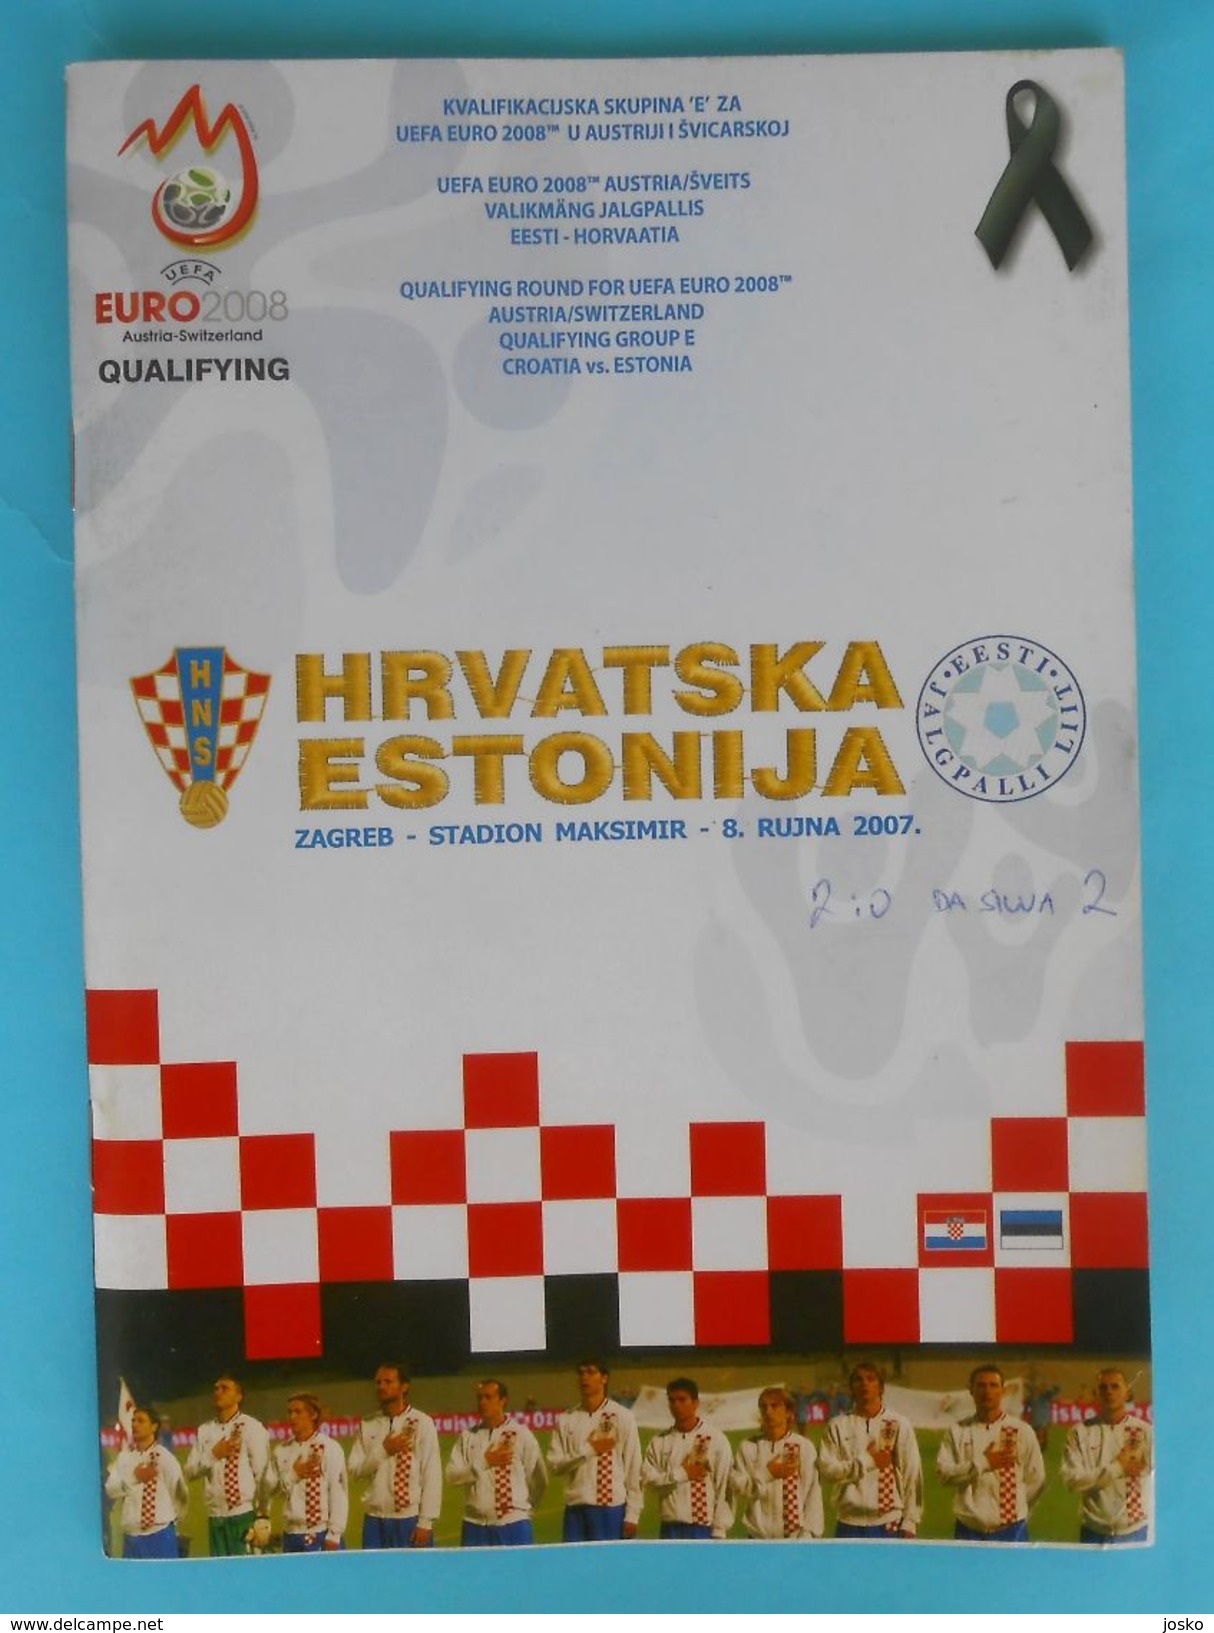 CROATIA V ESTONIA - 2008 UEFA EURO Qual. Football Match Programme * Soccer Fussball Programm Calcio Programma Programa - Programs